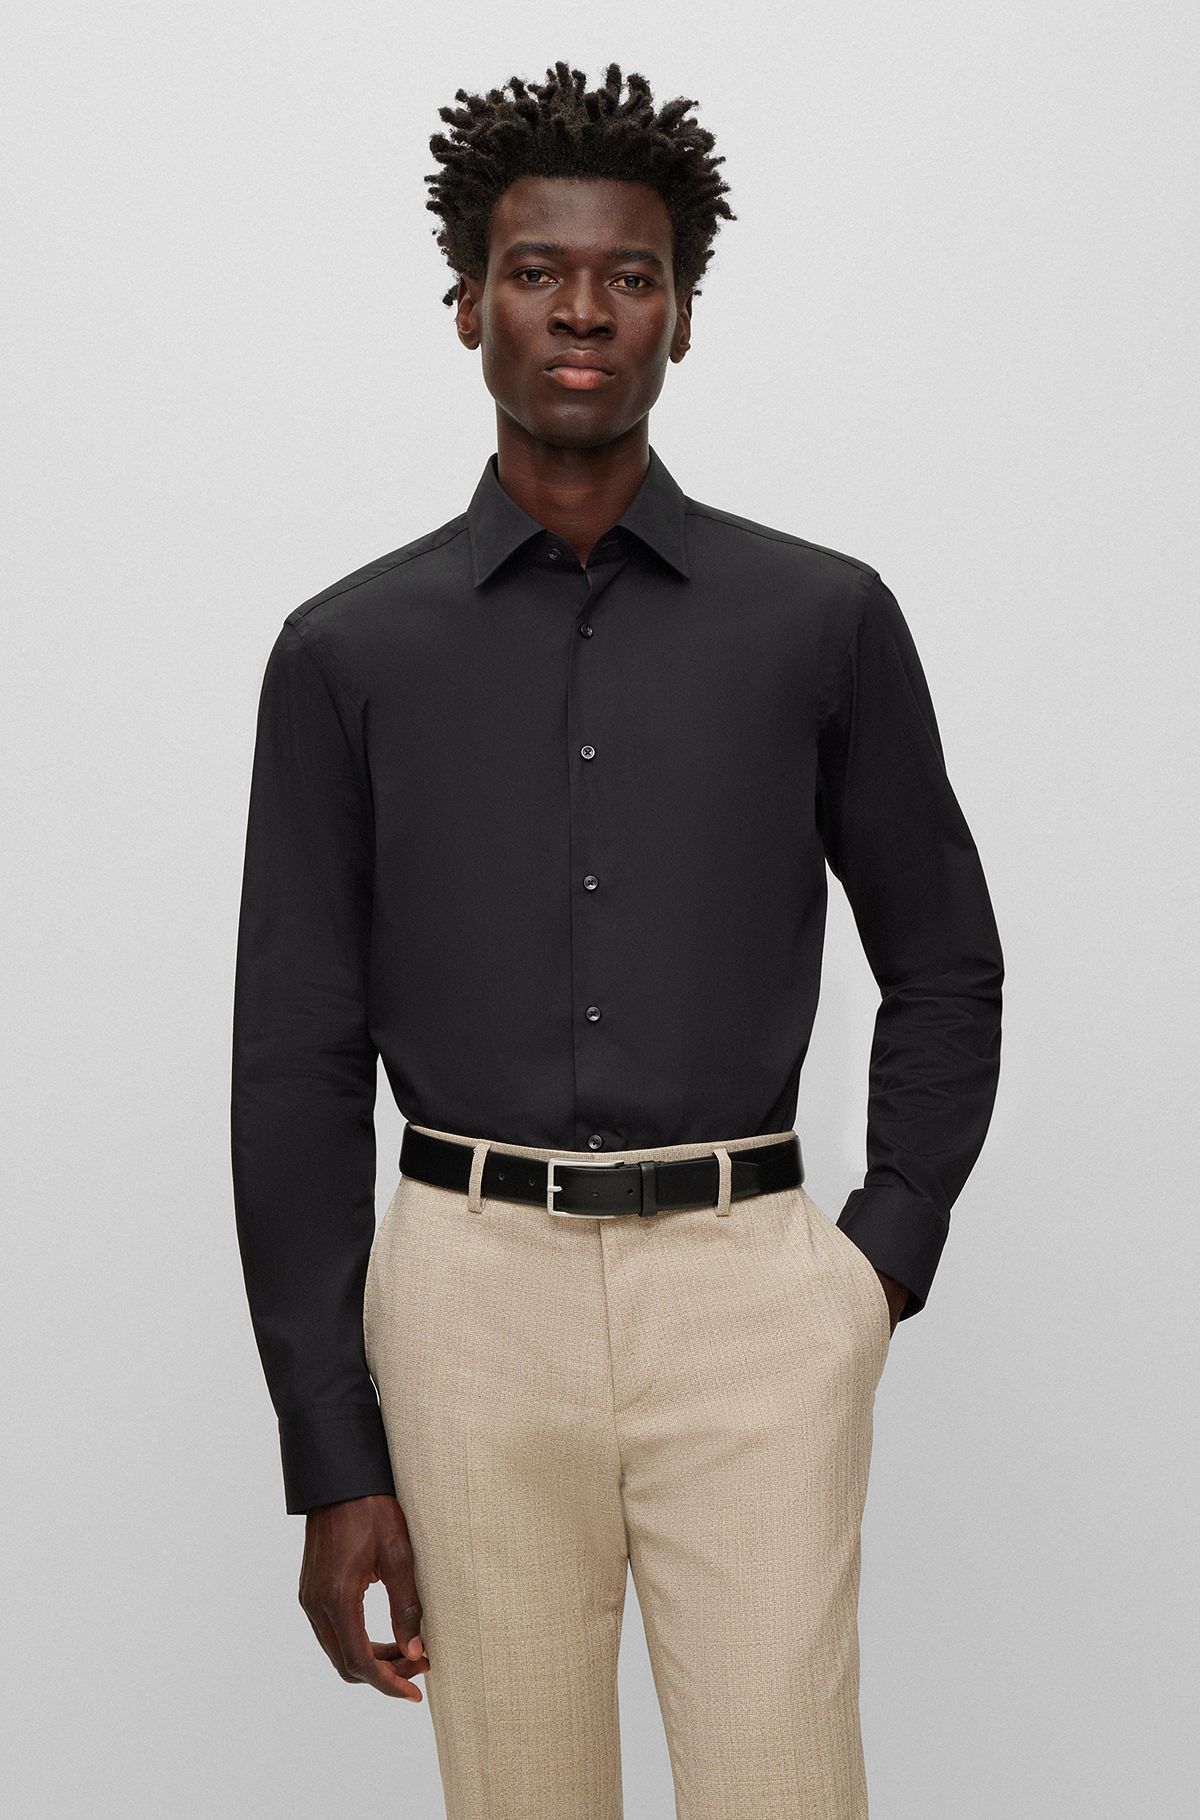 Men's Black Shirts - Dress Shirts, Sweaters, T-Shirts and Polos